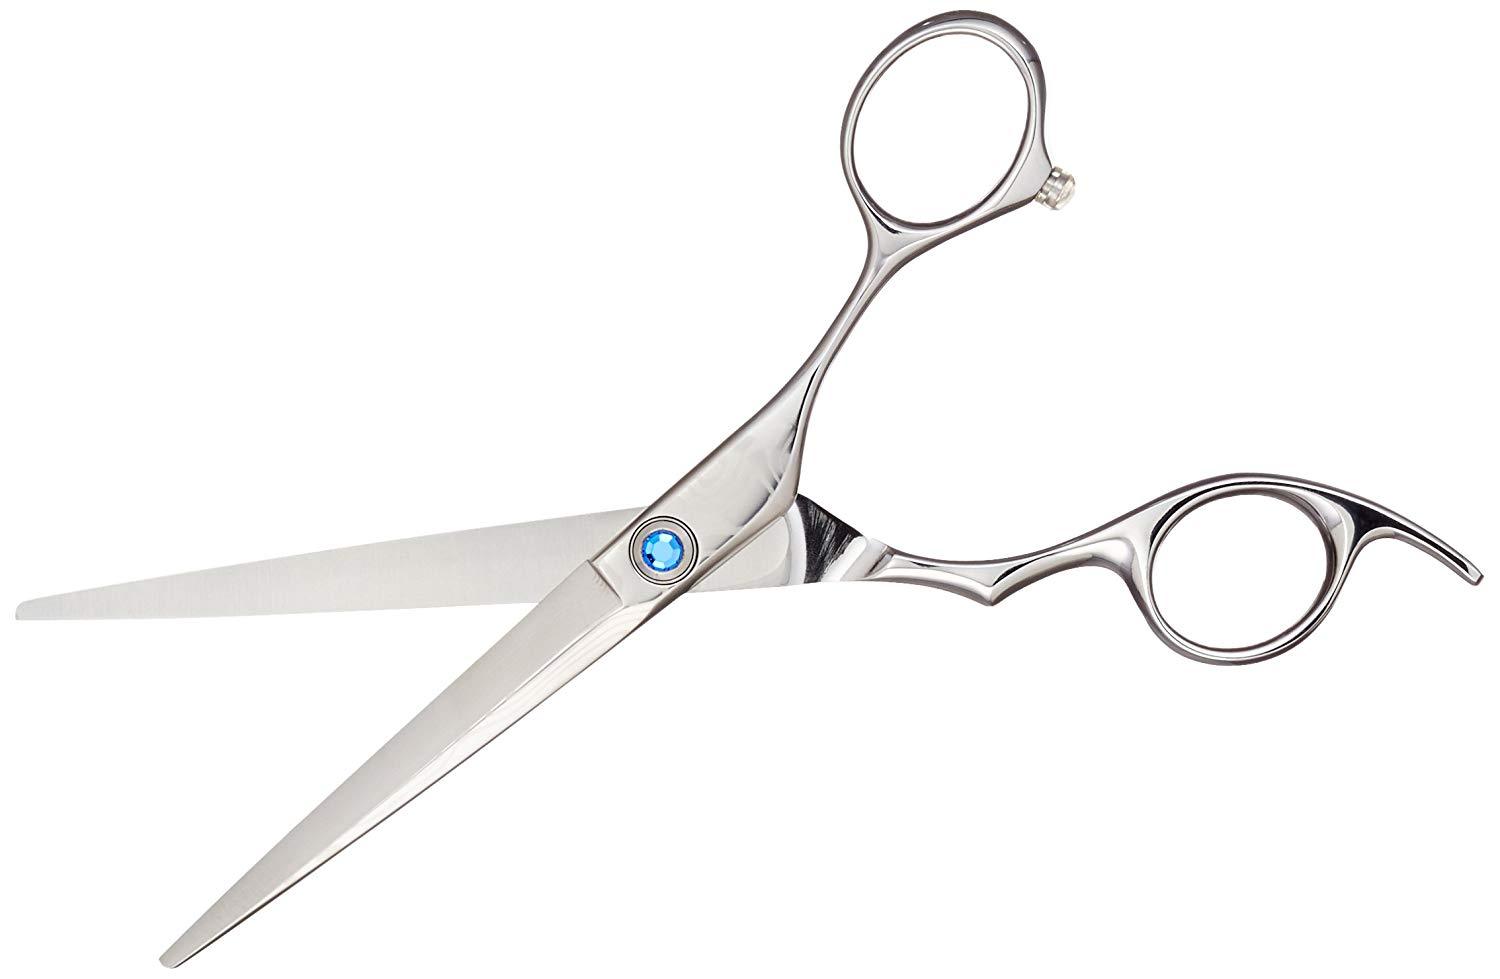 Kore Stone Damascus Steel Blender Shear Scissors - 30 Teeth - FHI Heat Pro